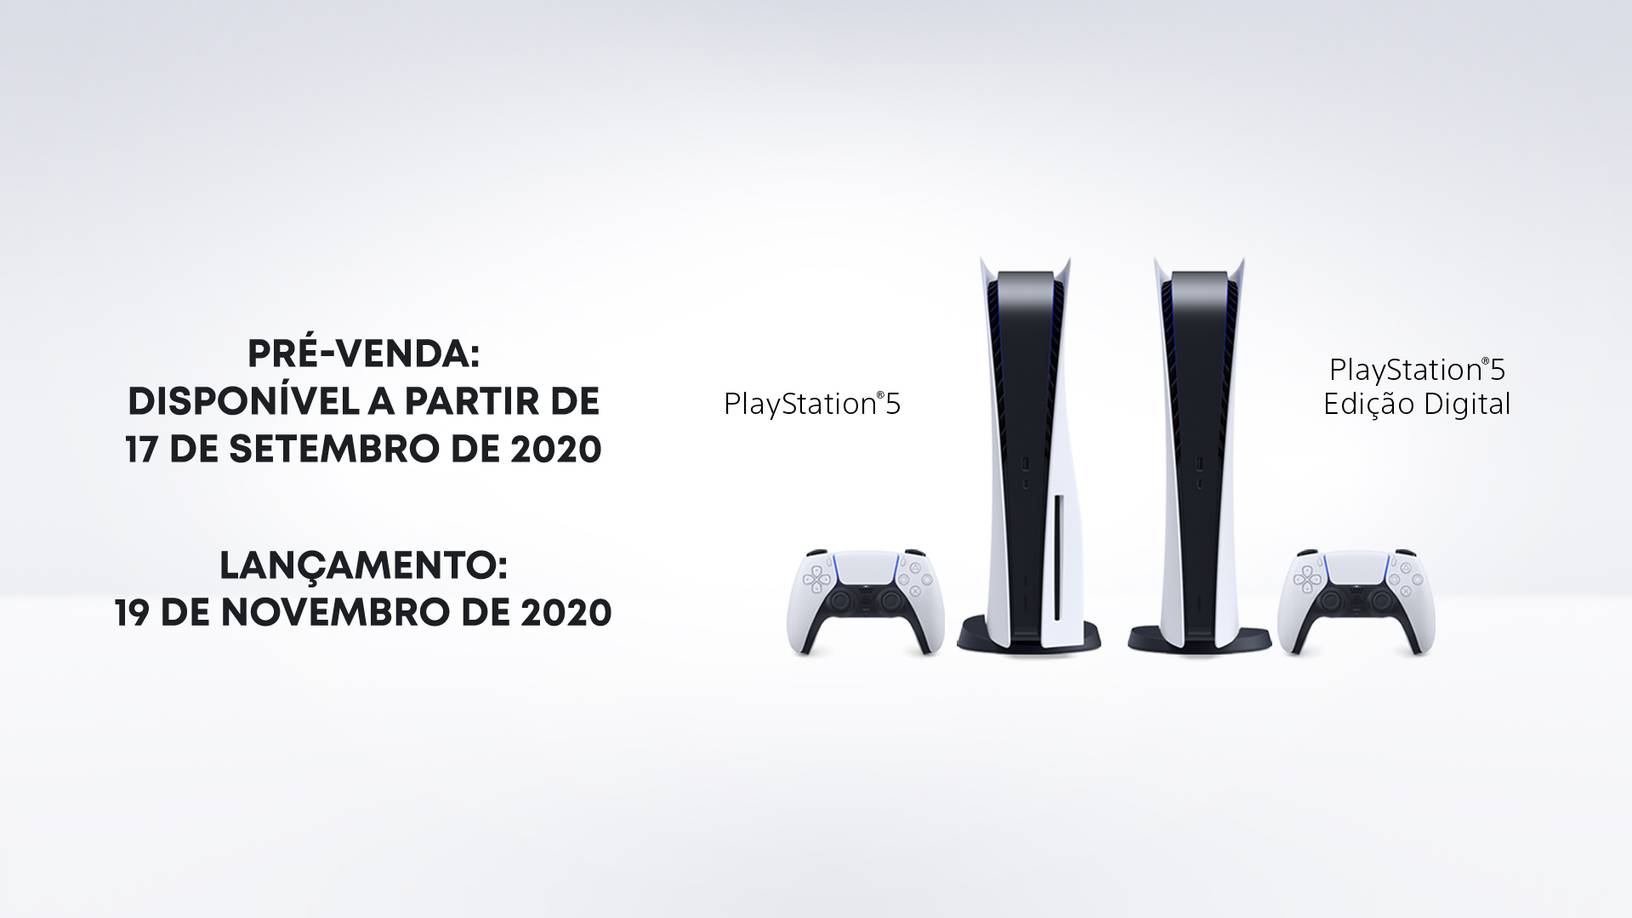 Konami anuncia jogo baseado em Edens Zero - PSX Brasil